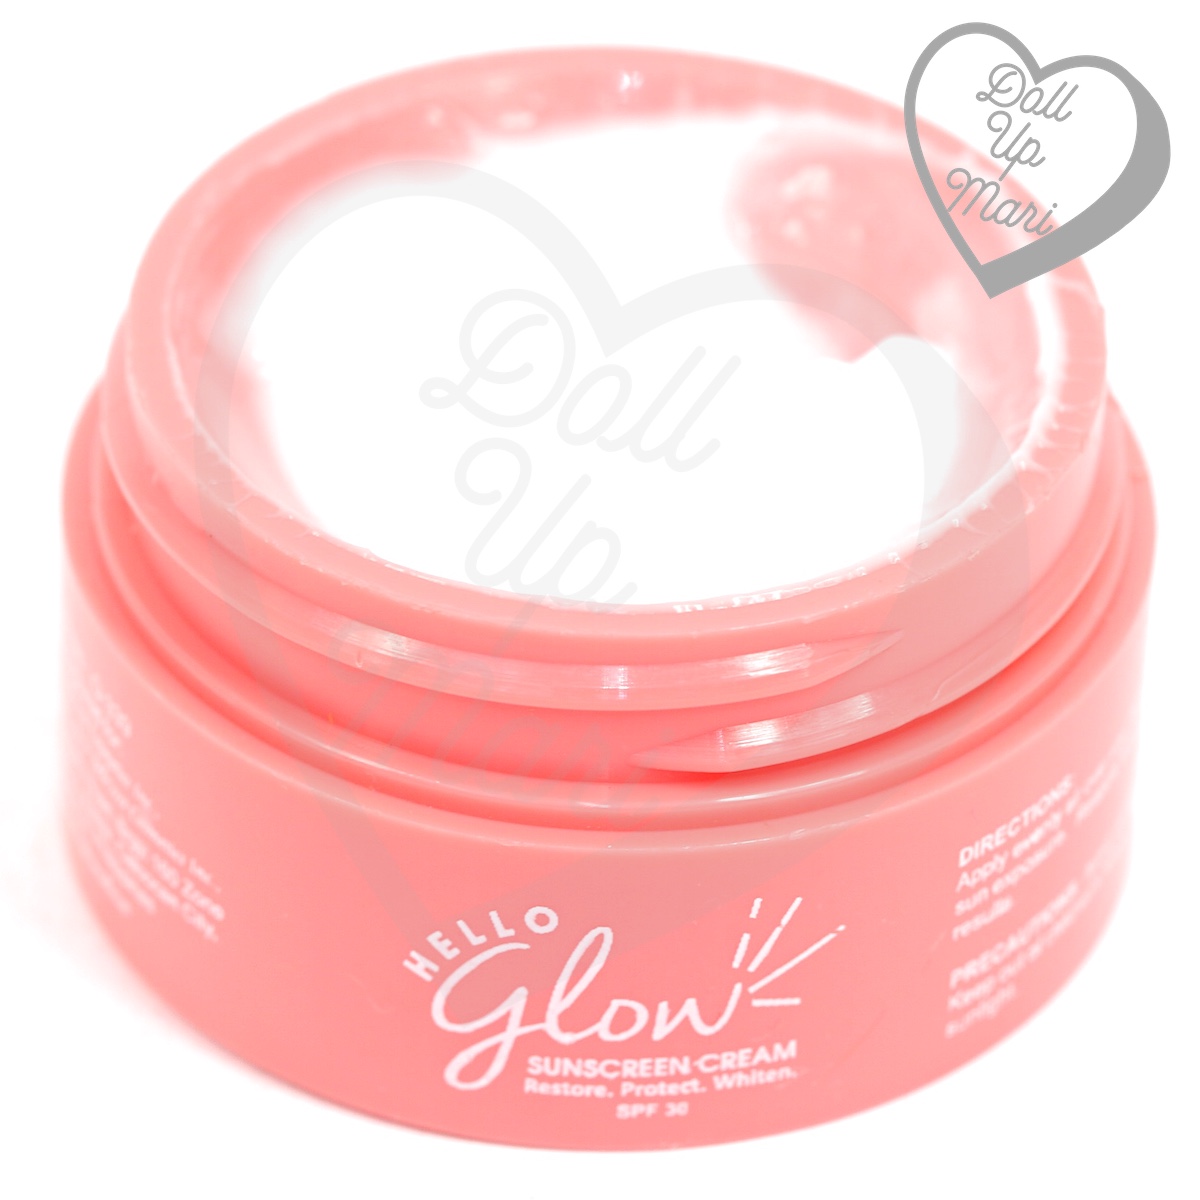 Hello Glow by Ever Bilena Whitening Cream jar when opened